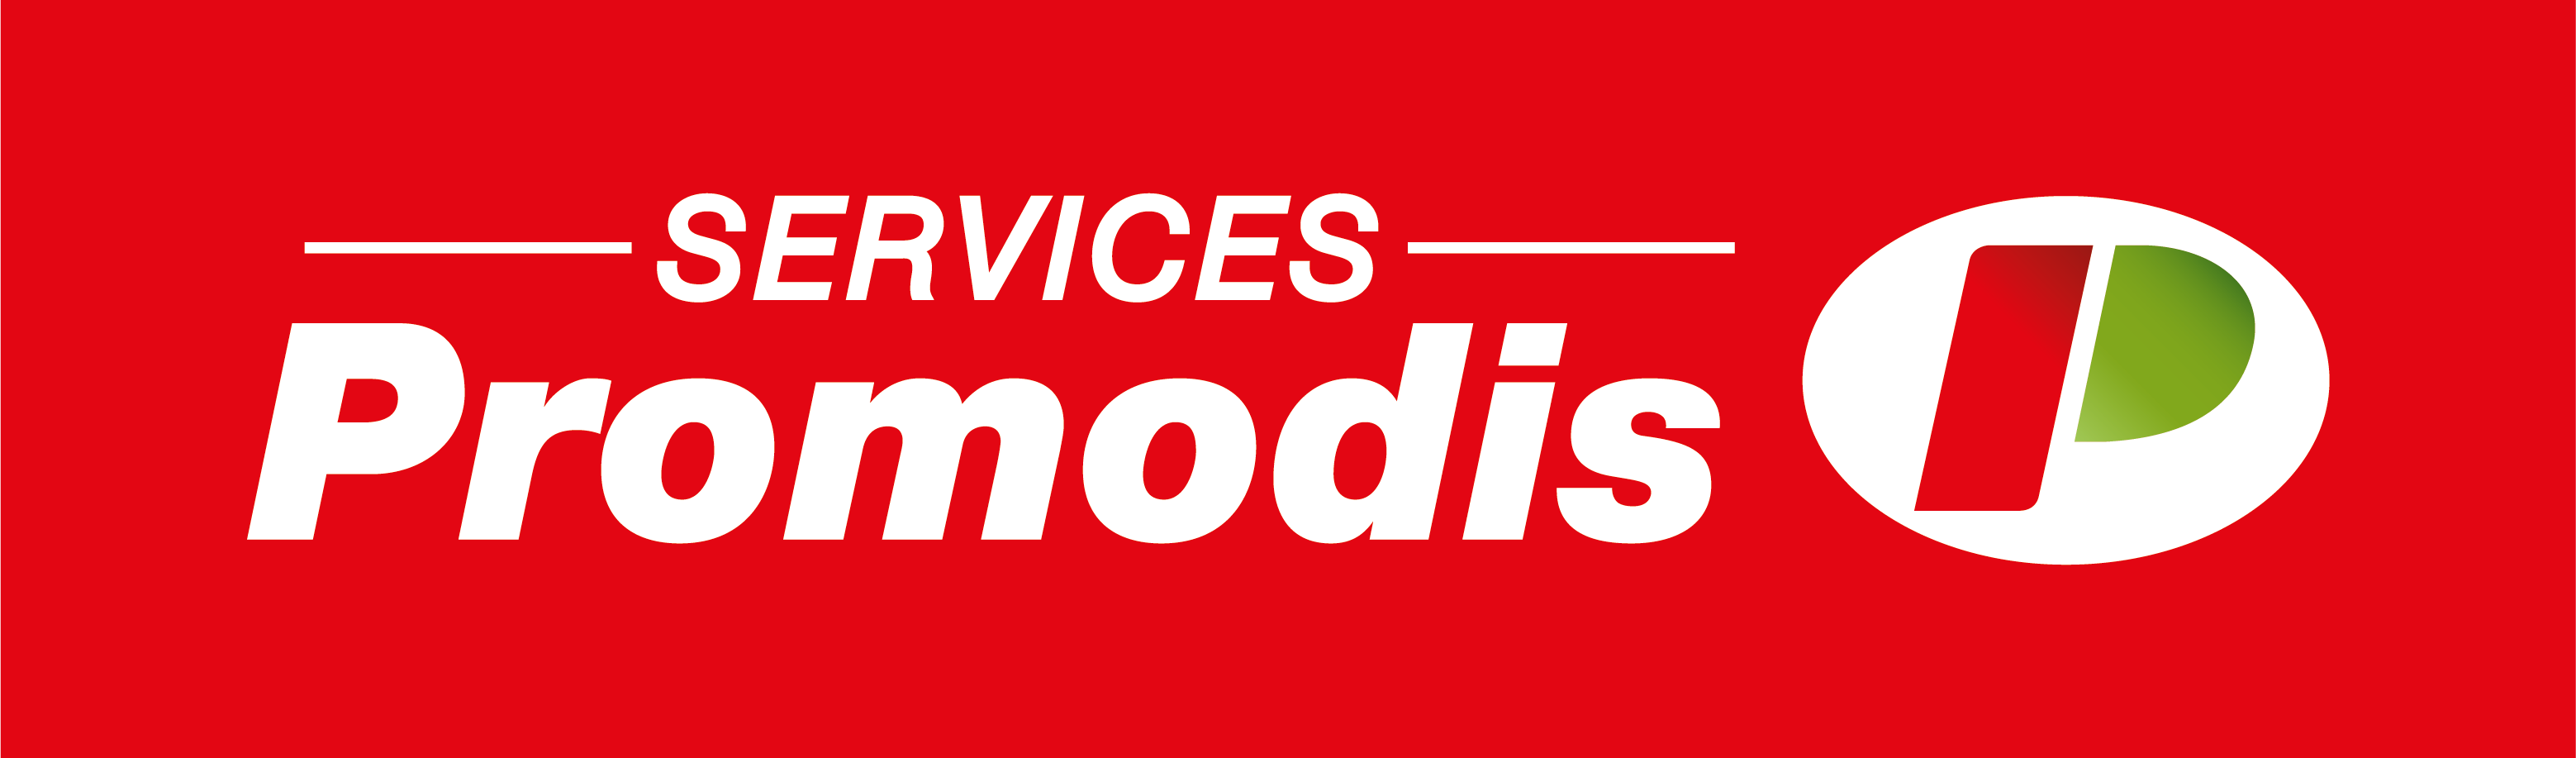 Services Promodis